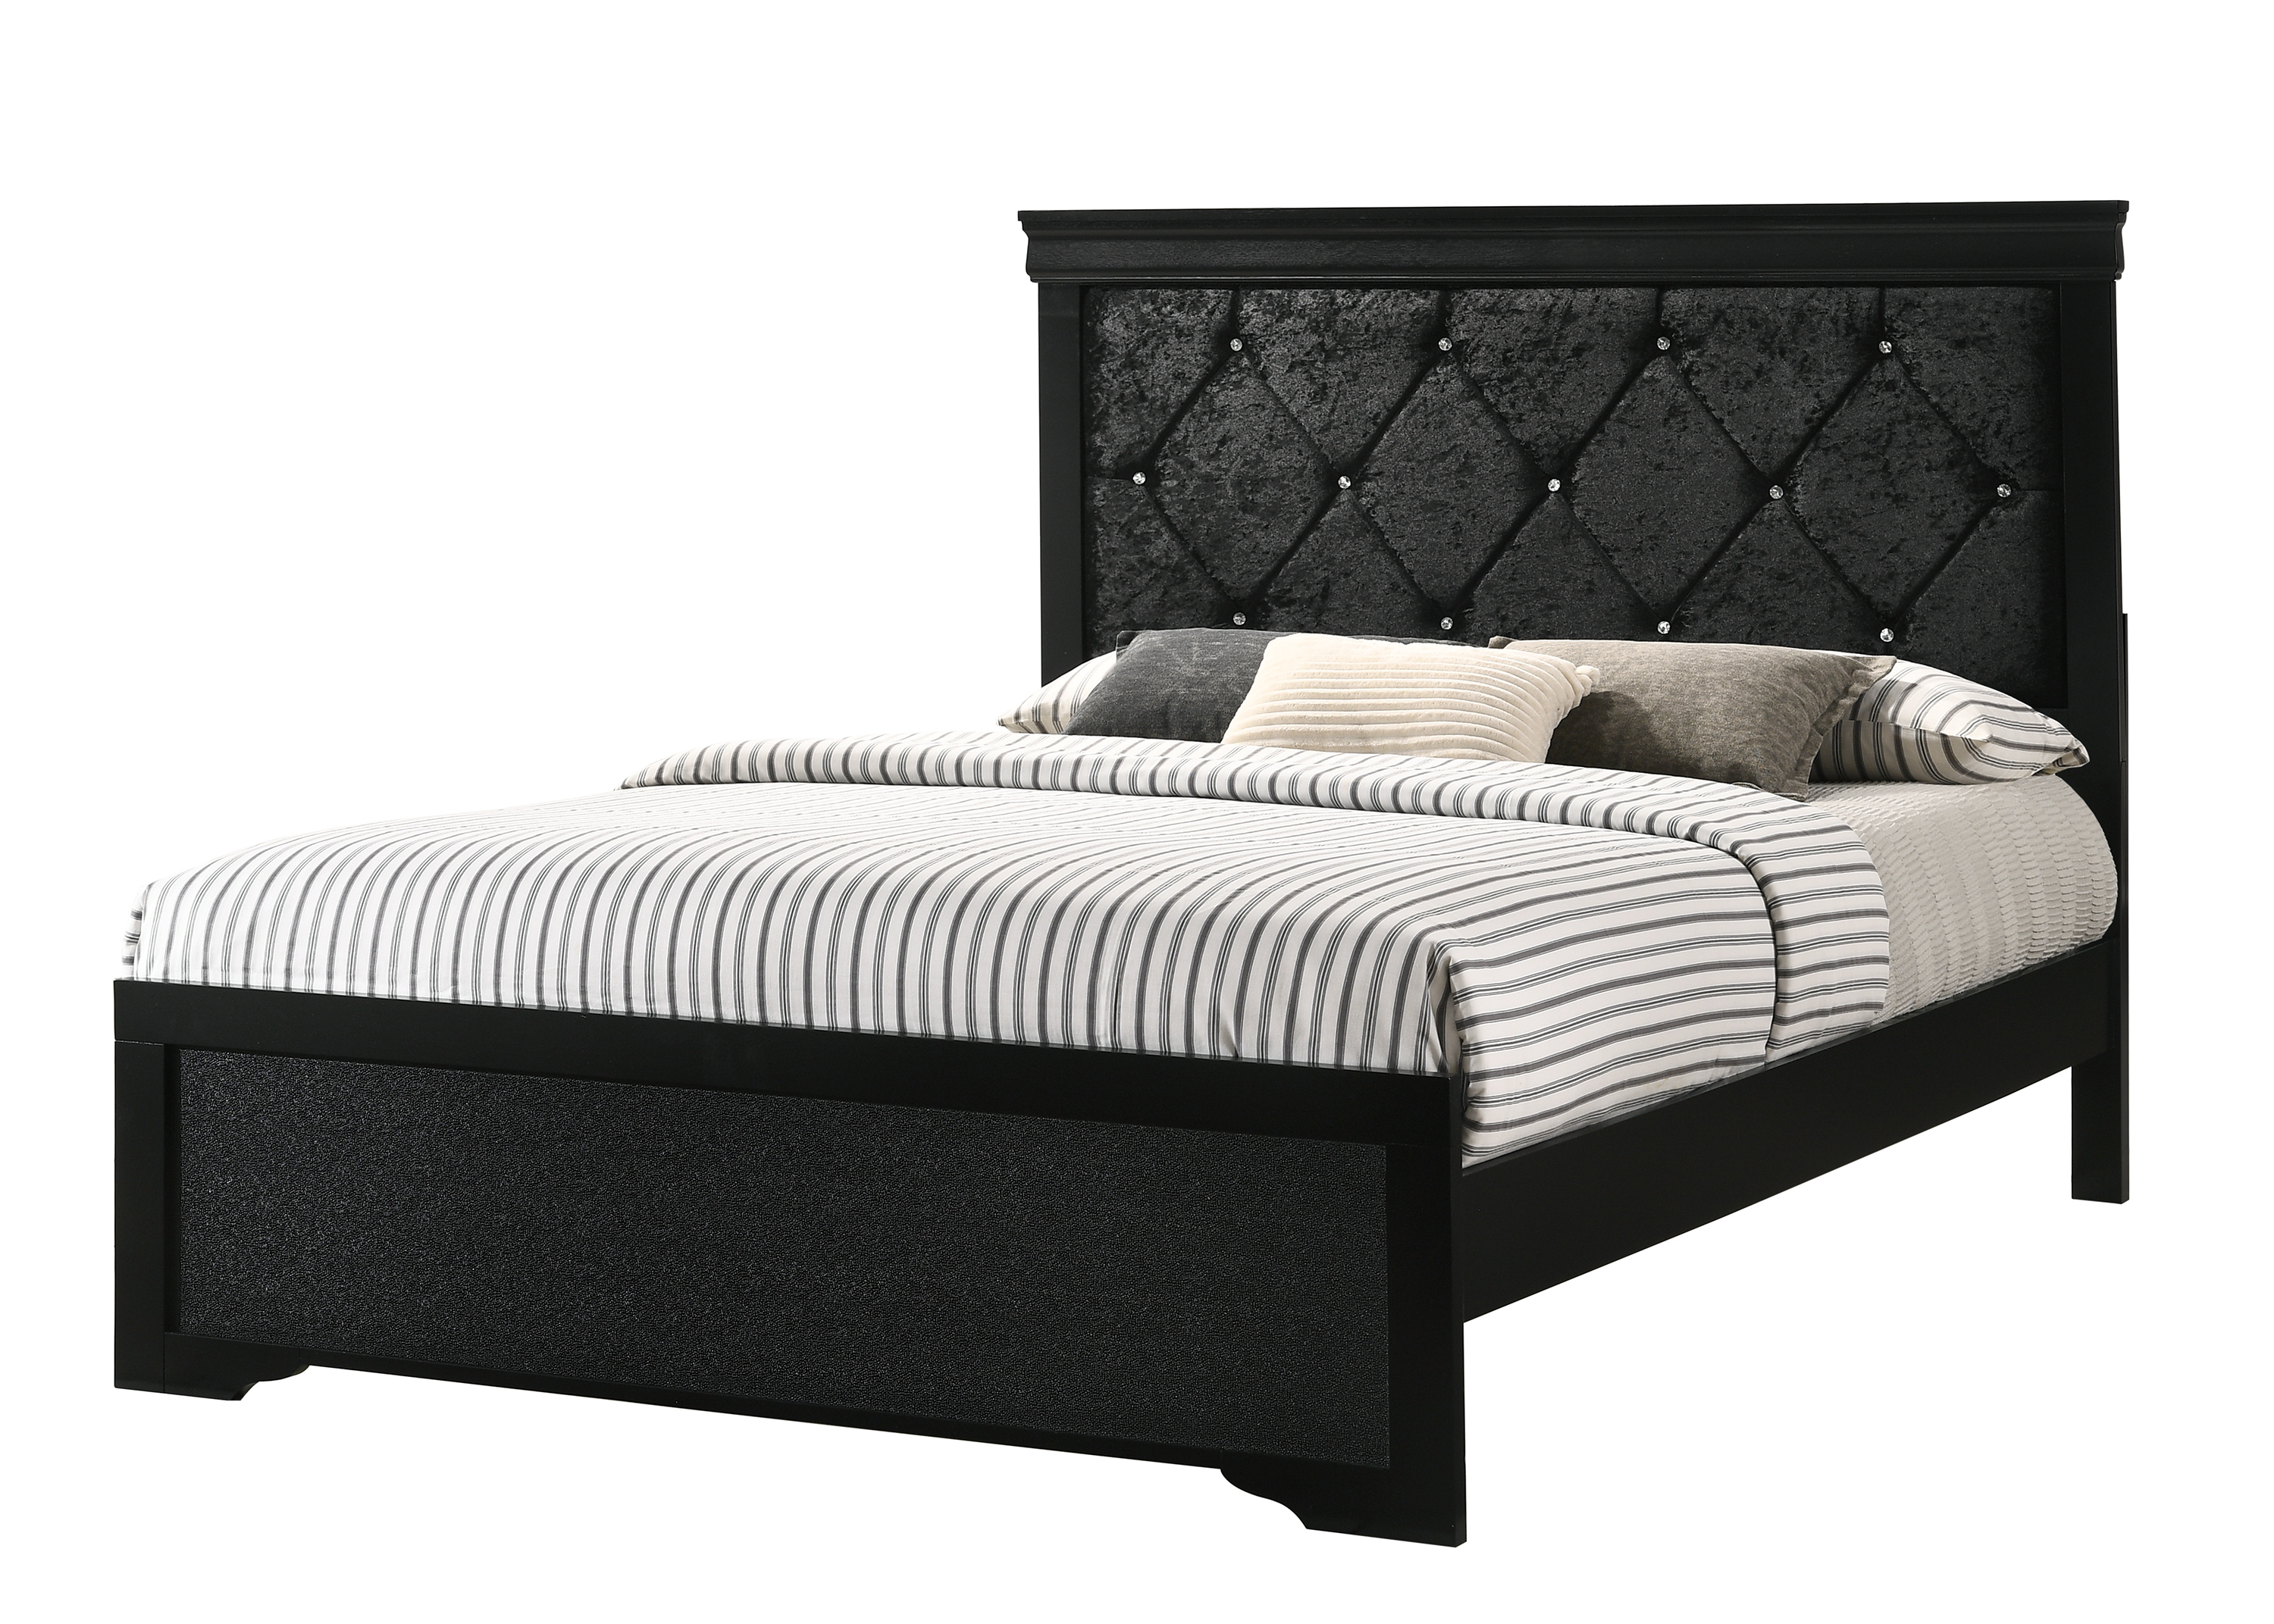 Modern 5pc Full Size Black Finish Upholstered Bed Set Solid Wood Storage Wooden Bedroom Furniture - image 2 of 7